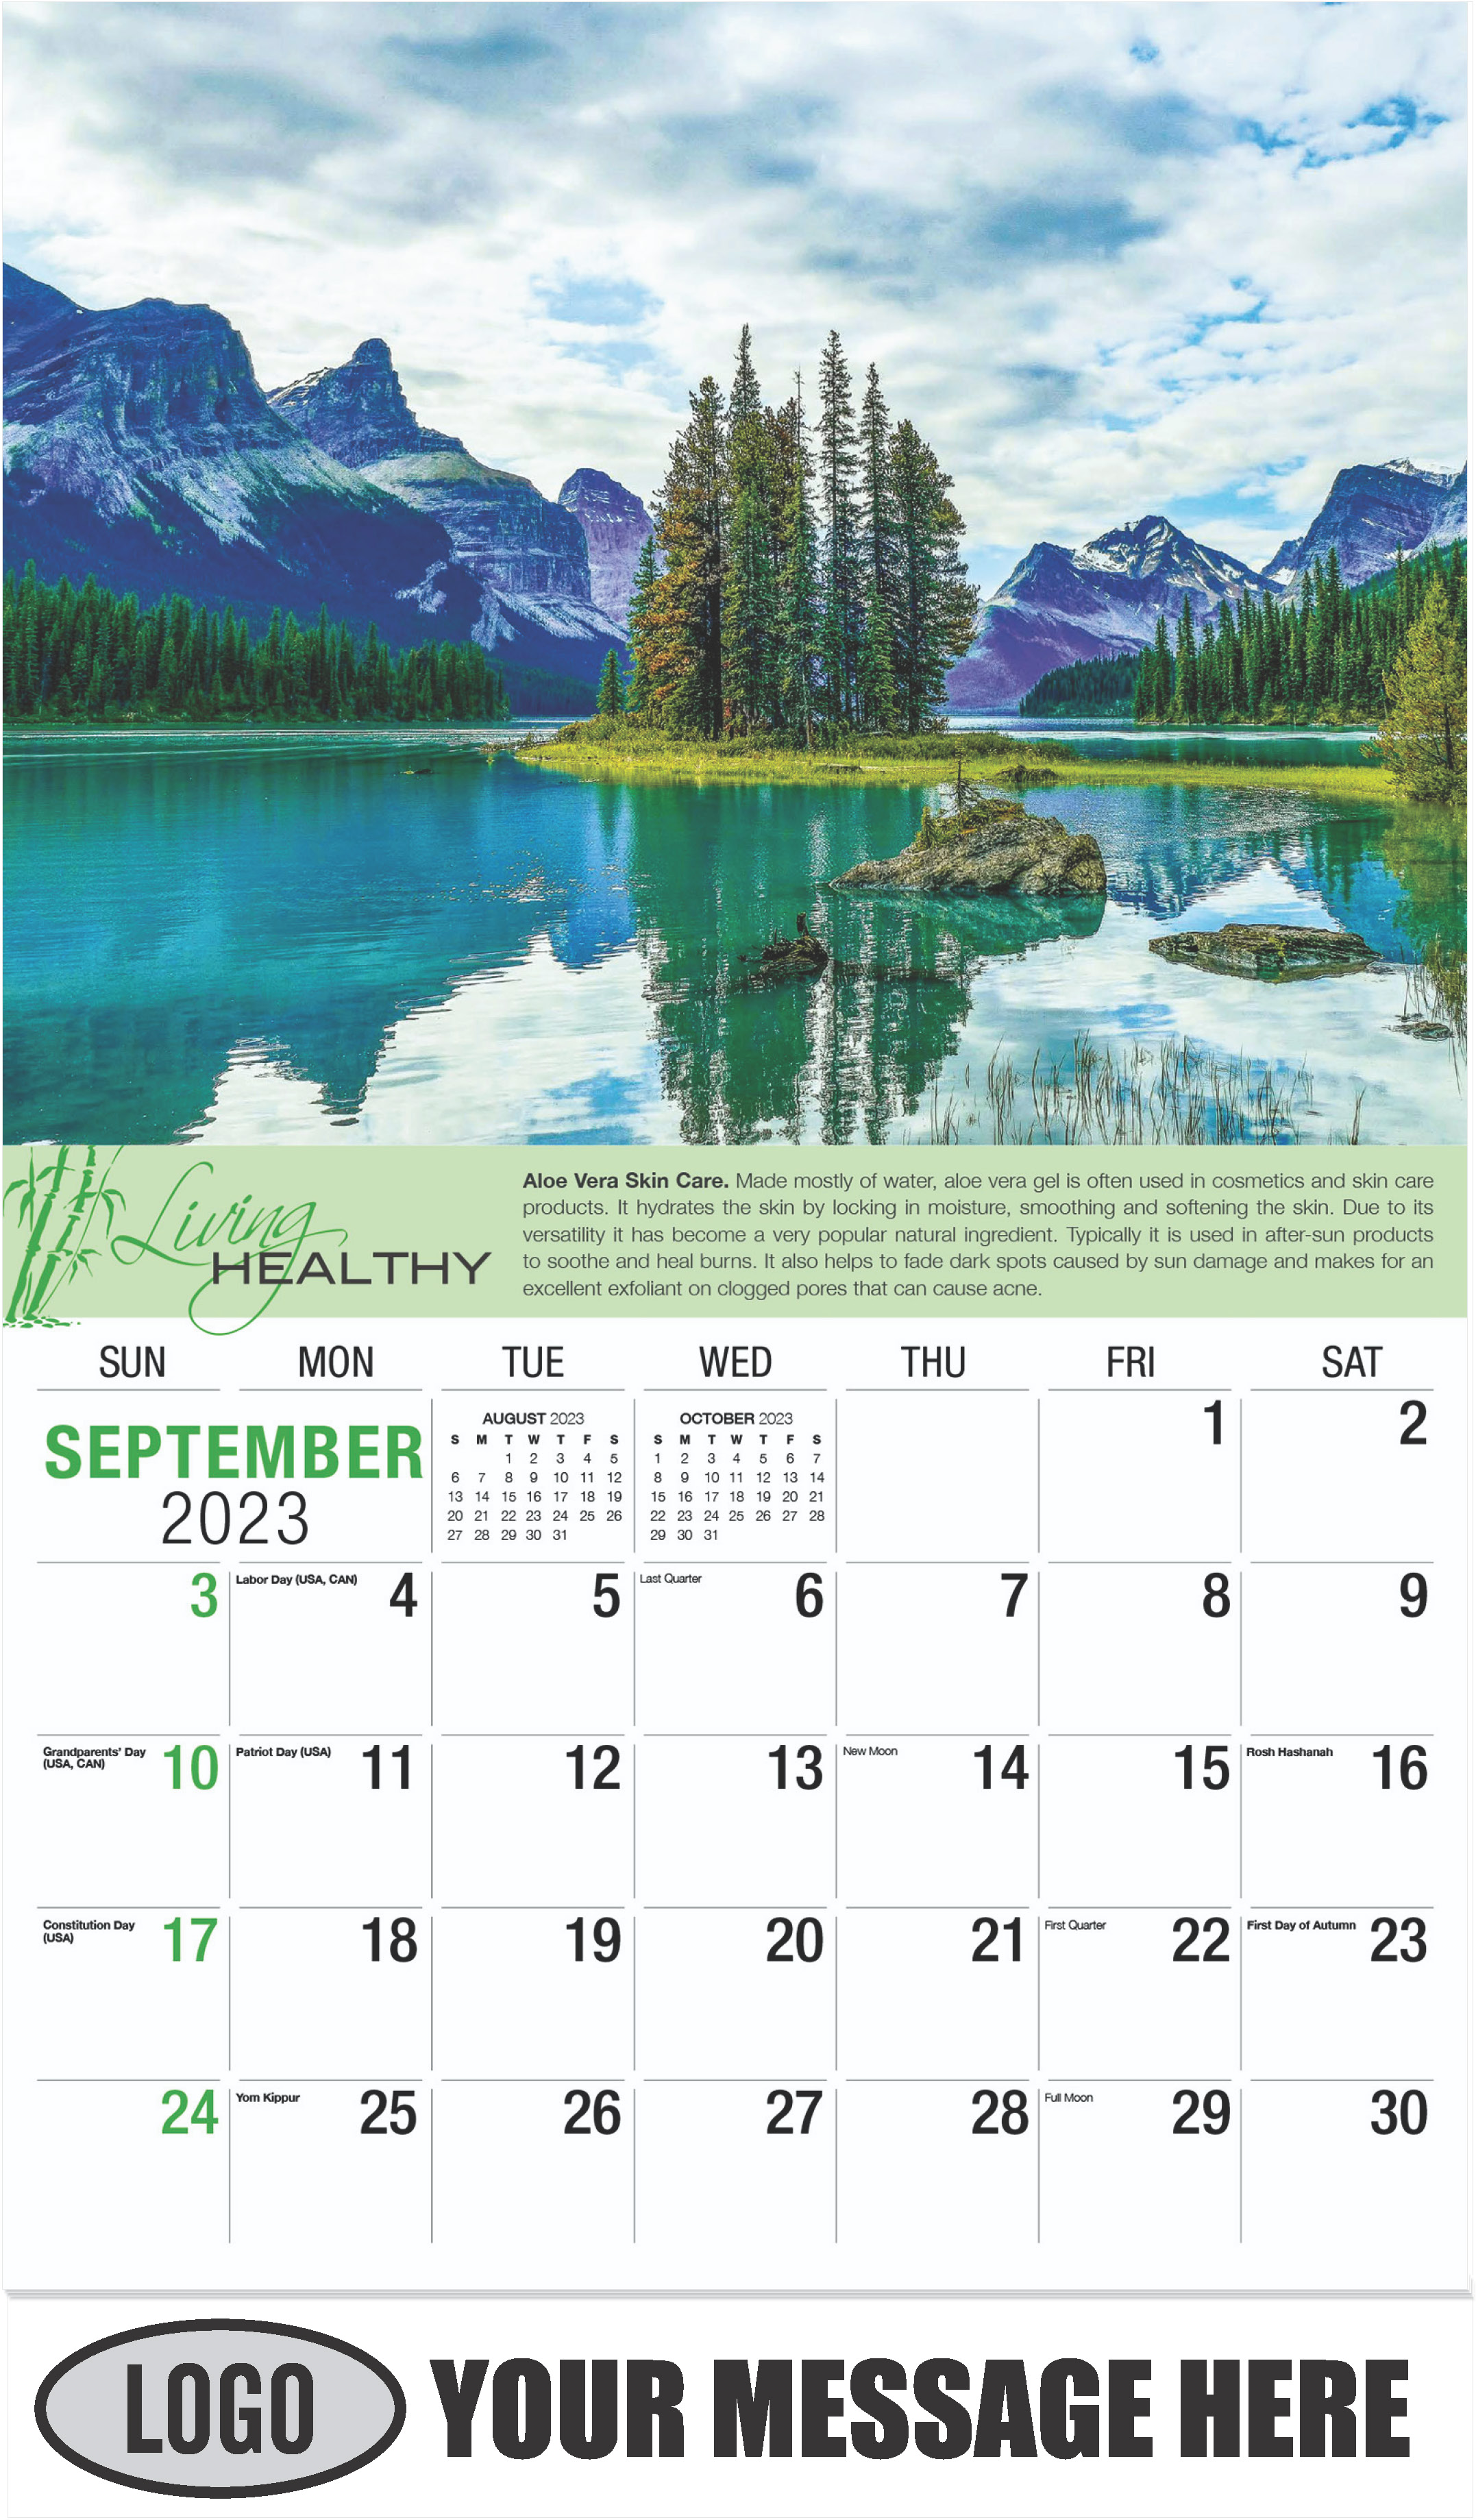 Spirit Island - September - Living Healthy 2023 Promotional Calendar